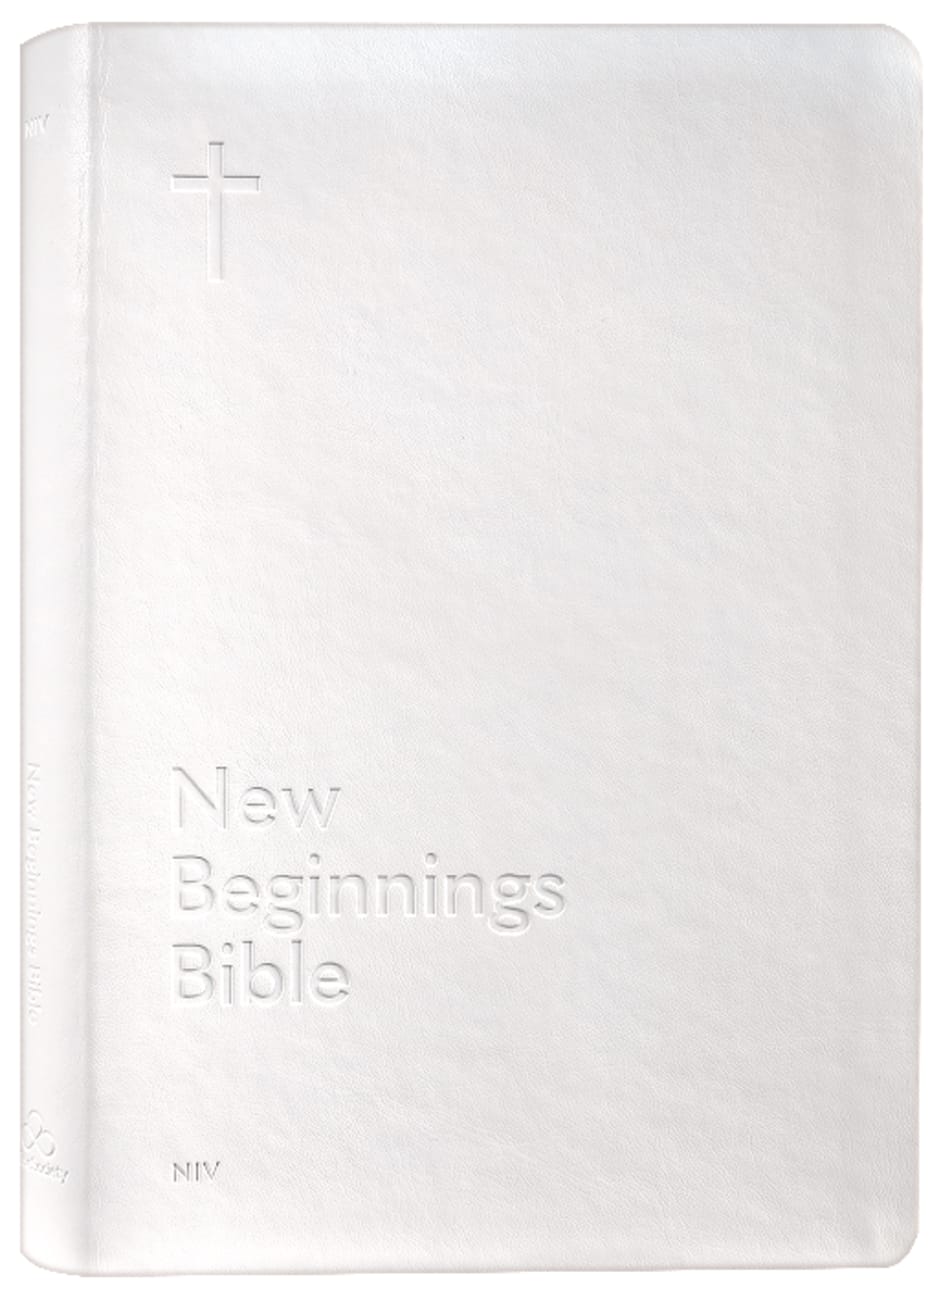 B NIV NEW BEGINNINGS BIBLE